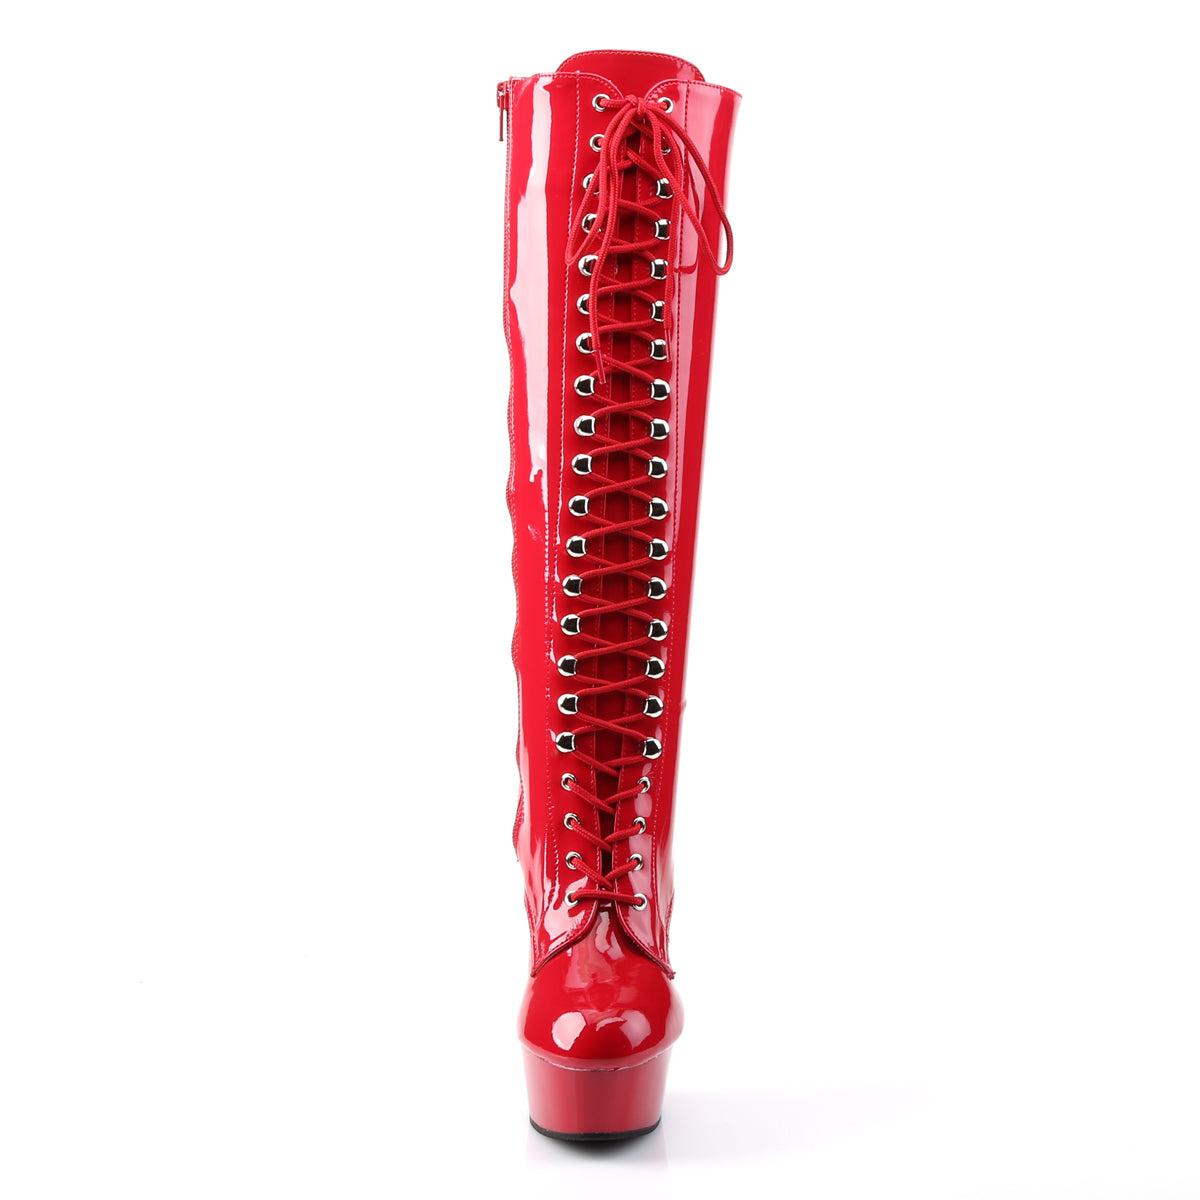 DELIGHT-2023 Pleaser 6 Inch Heel Red Pole Dancing Platforms-Pleaser- Sexy Shoes Alternative Footwear